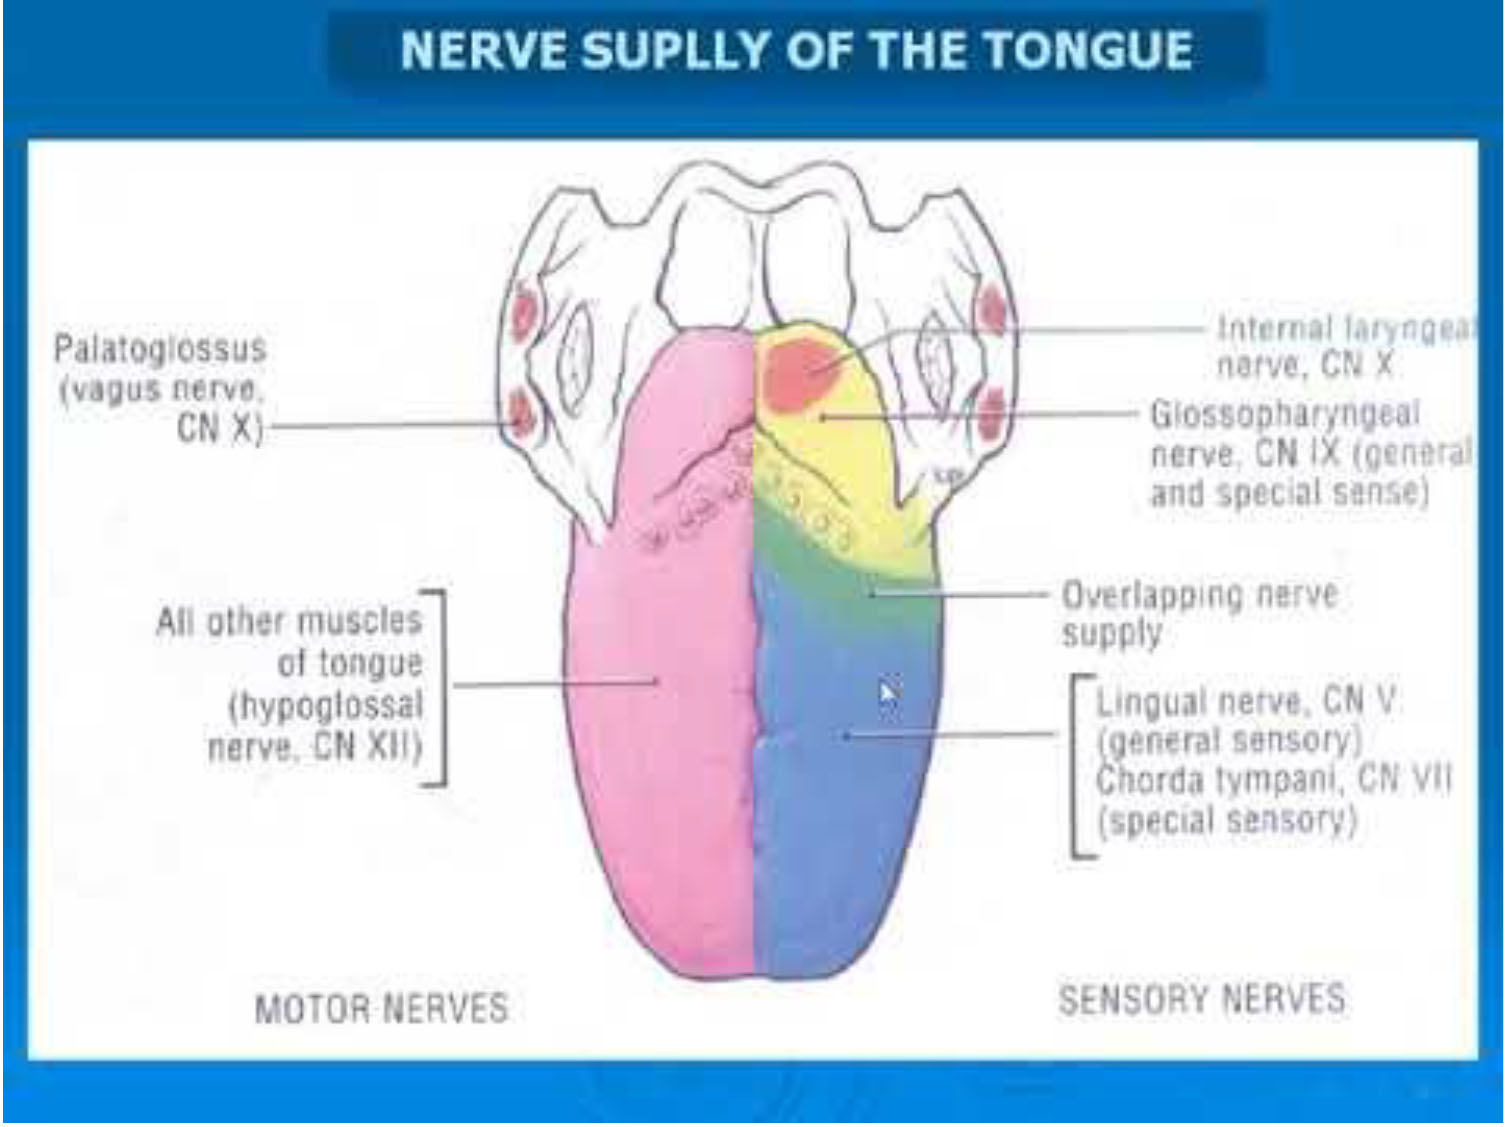 TONGUE -nerve supply